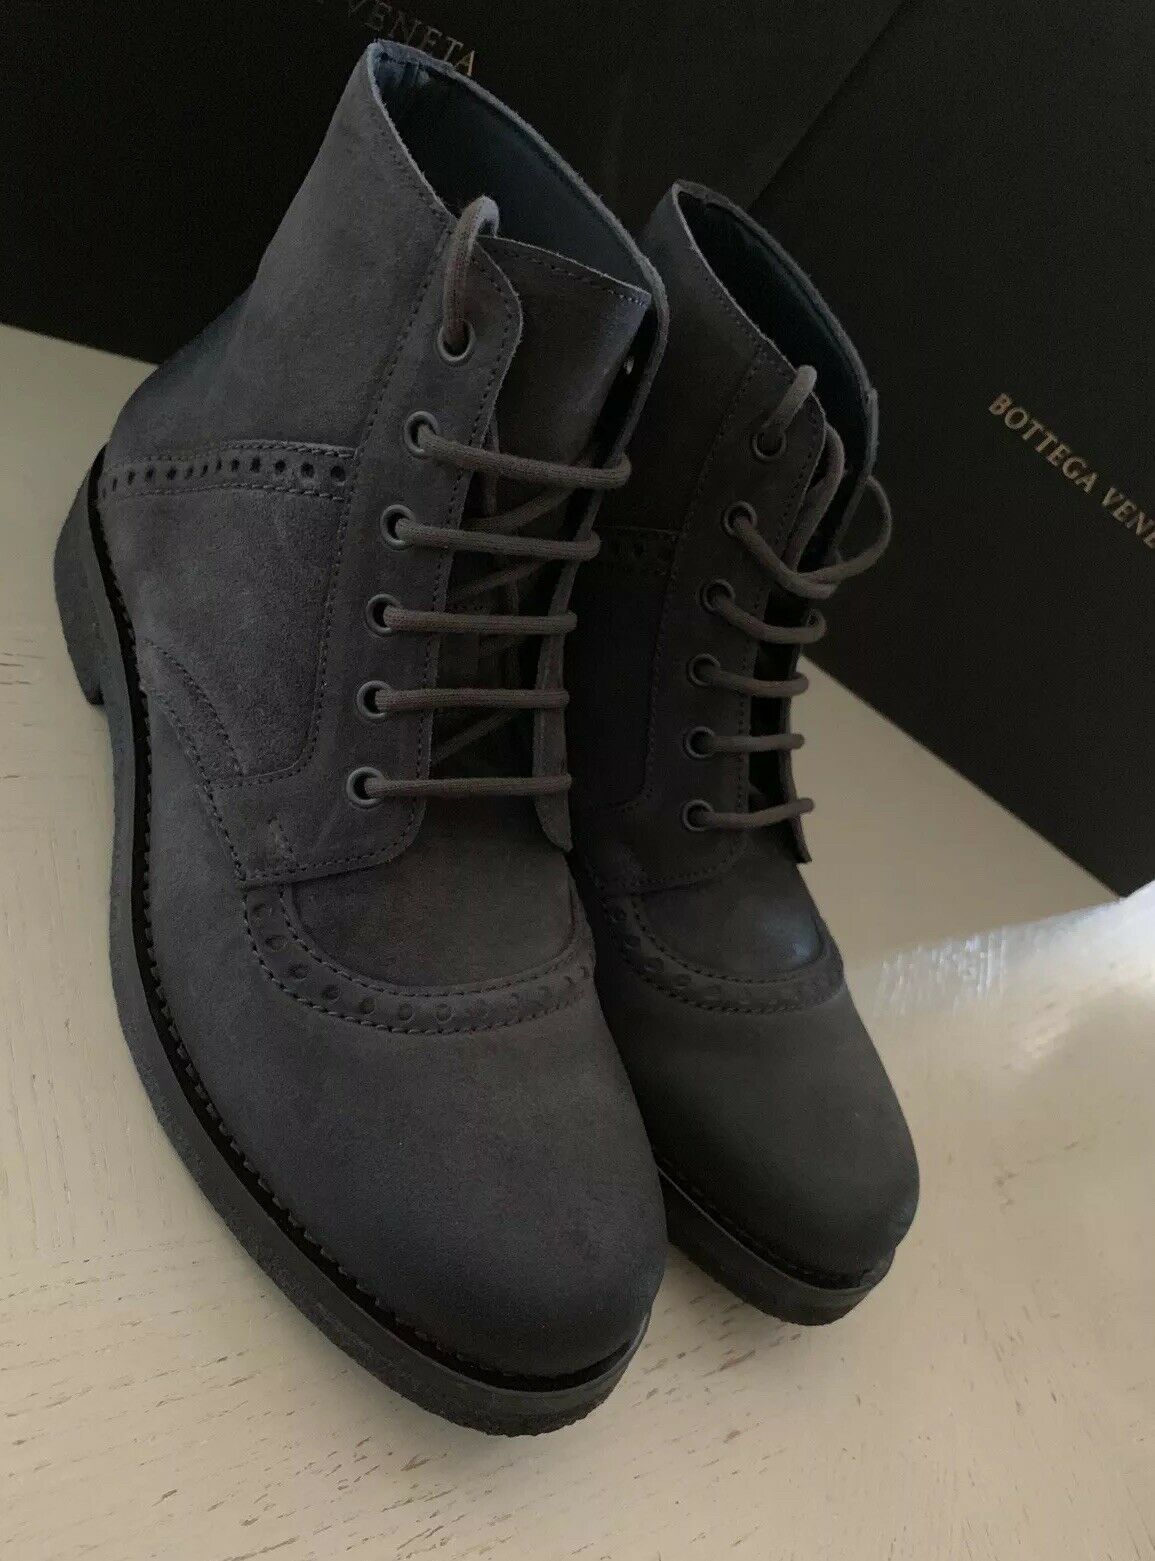 NIB $810 Bottega Veneta Mens Leather Boots Shoes DK Gray 8.5 US/41.5 Eu